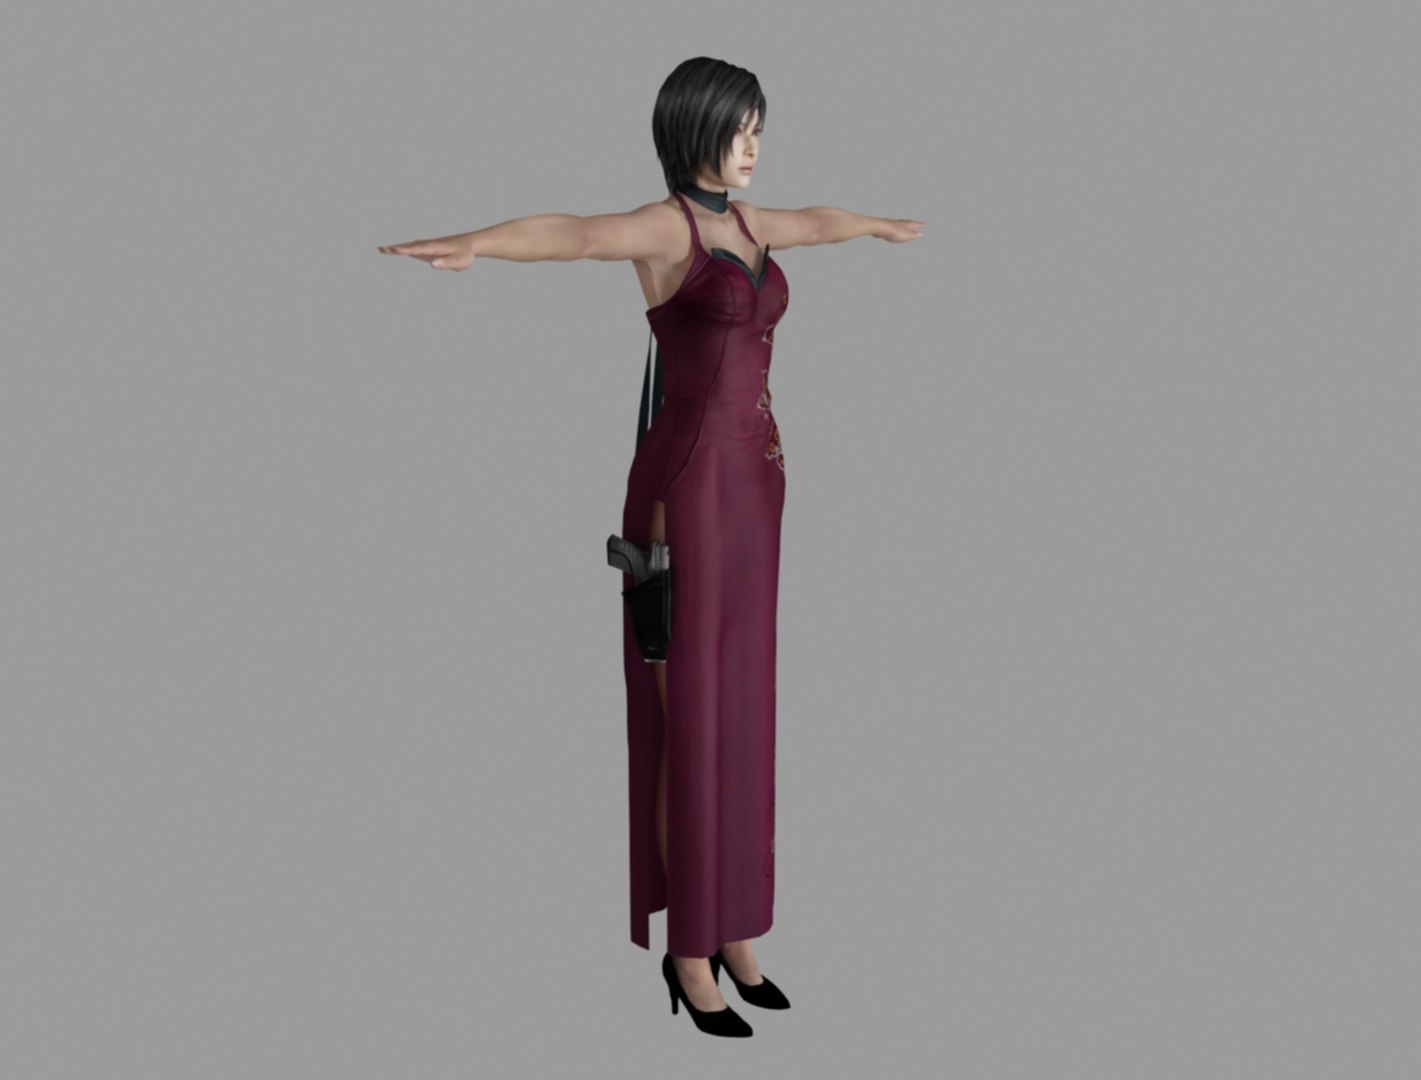 Ada Wong - Resident Evil 2 Remake 3D Model by qaz